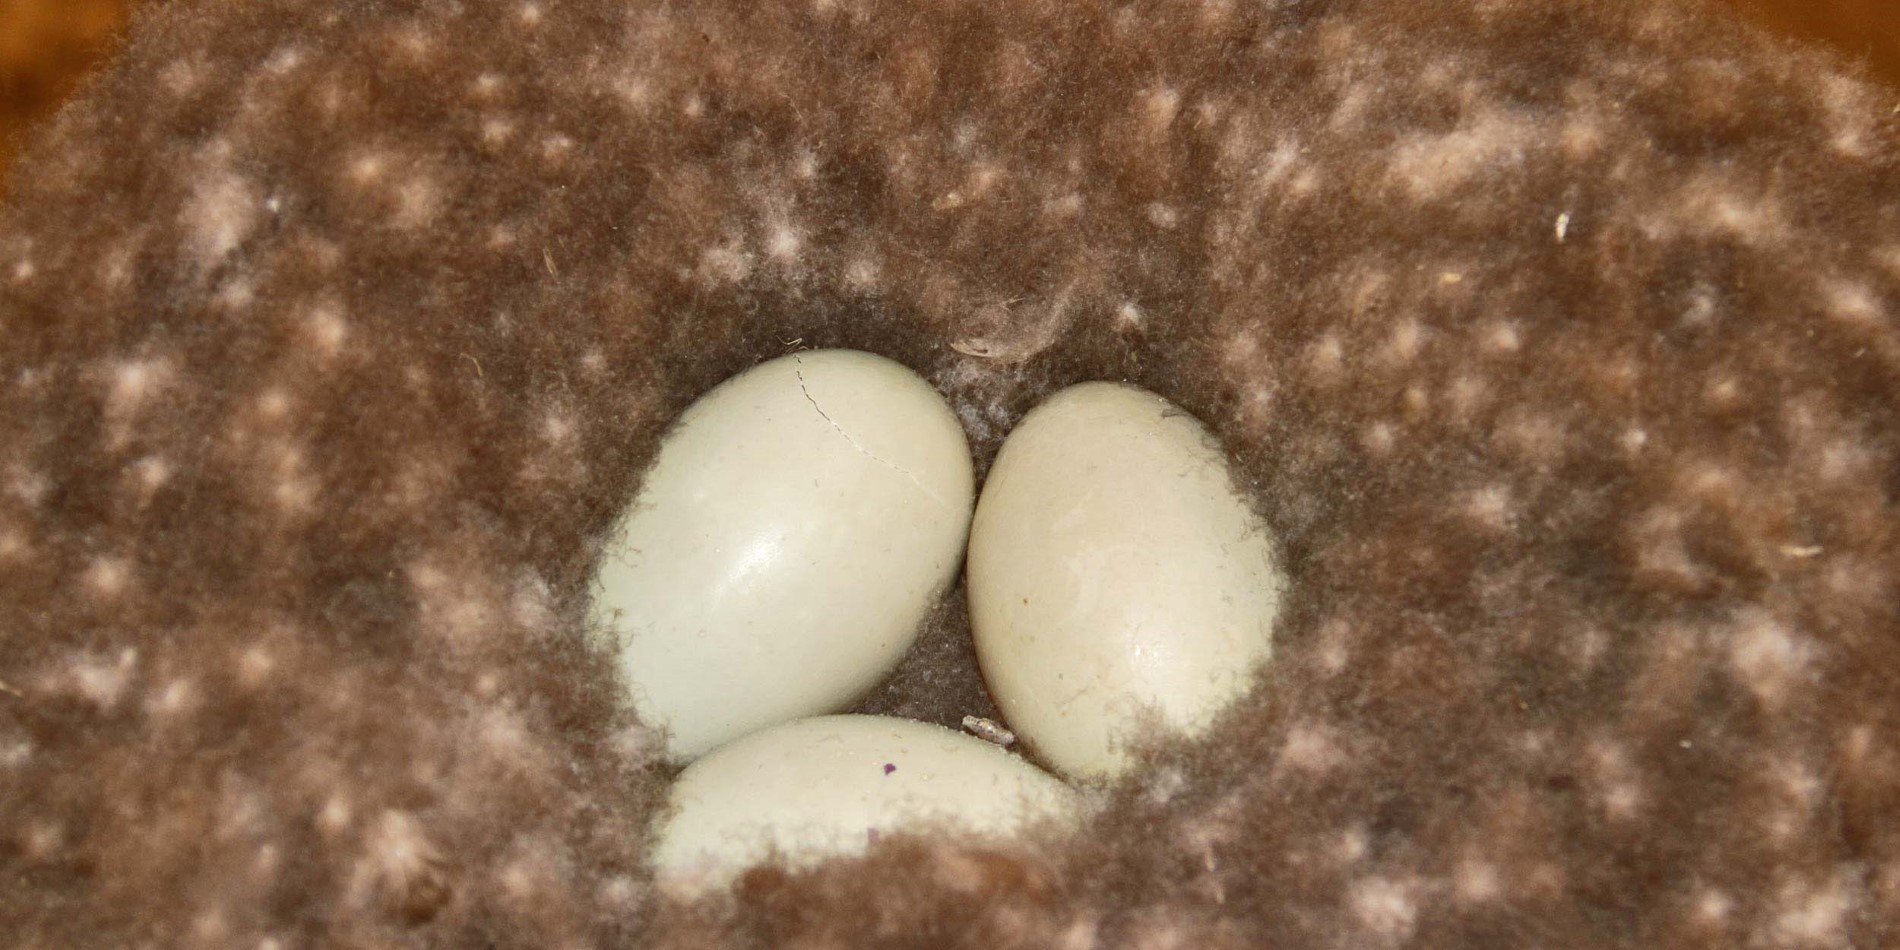 A close up of a egg